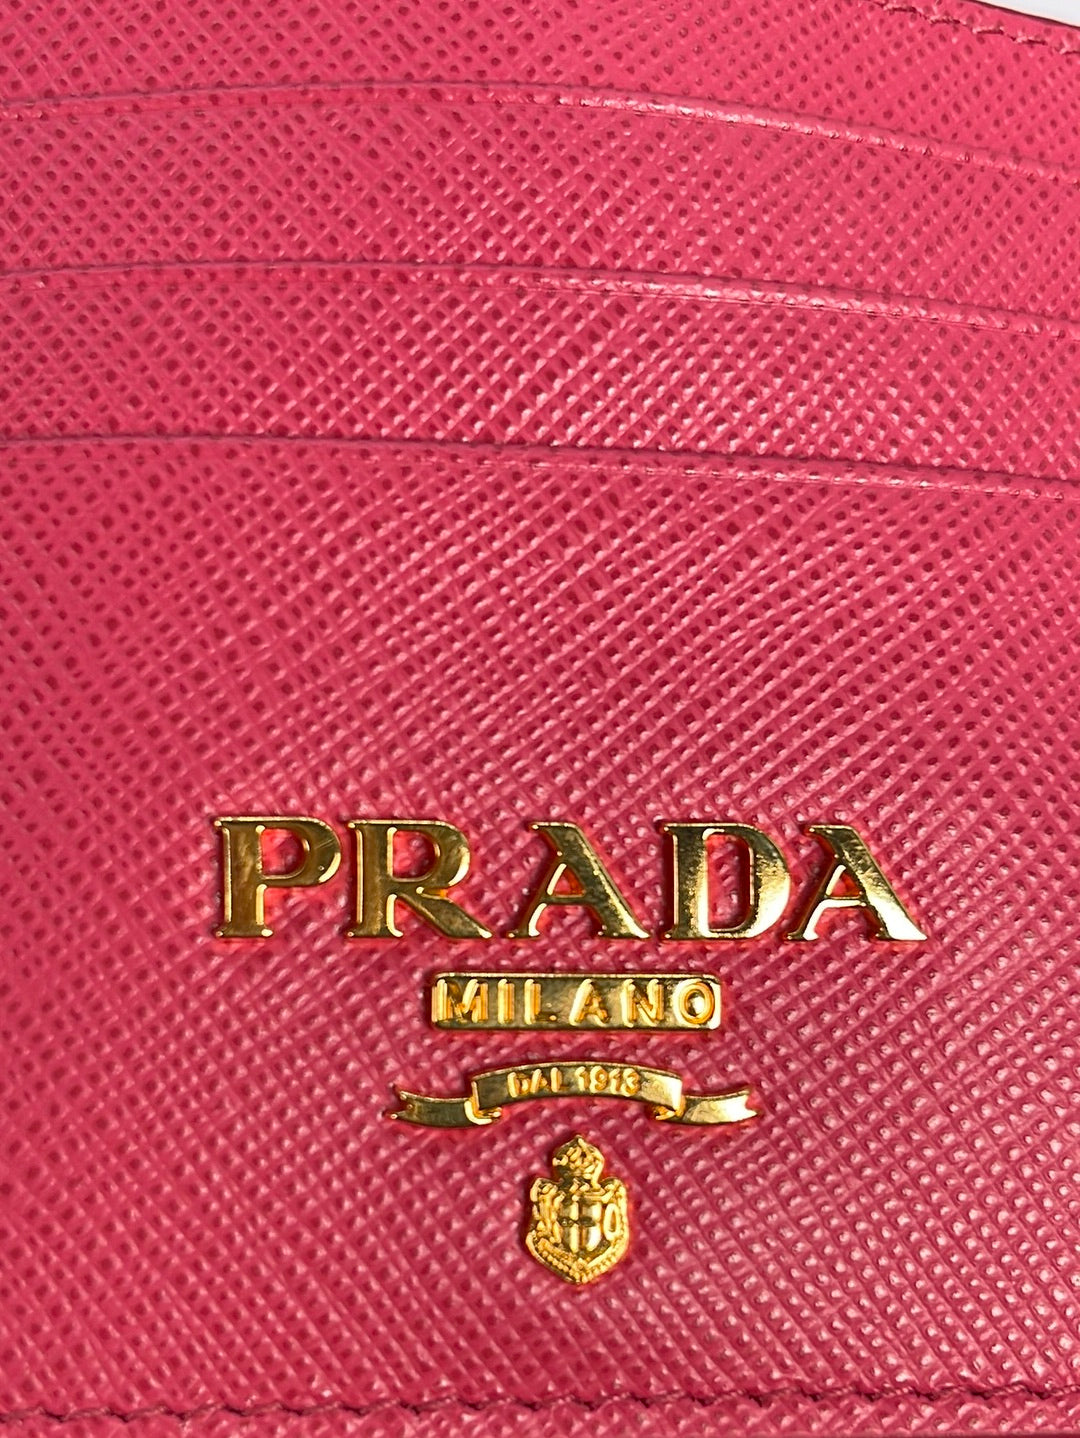 PRELOVED Prada Pink Saffiano Leather Card Case 234 020123